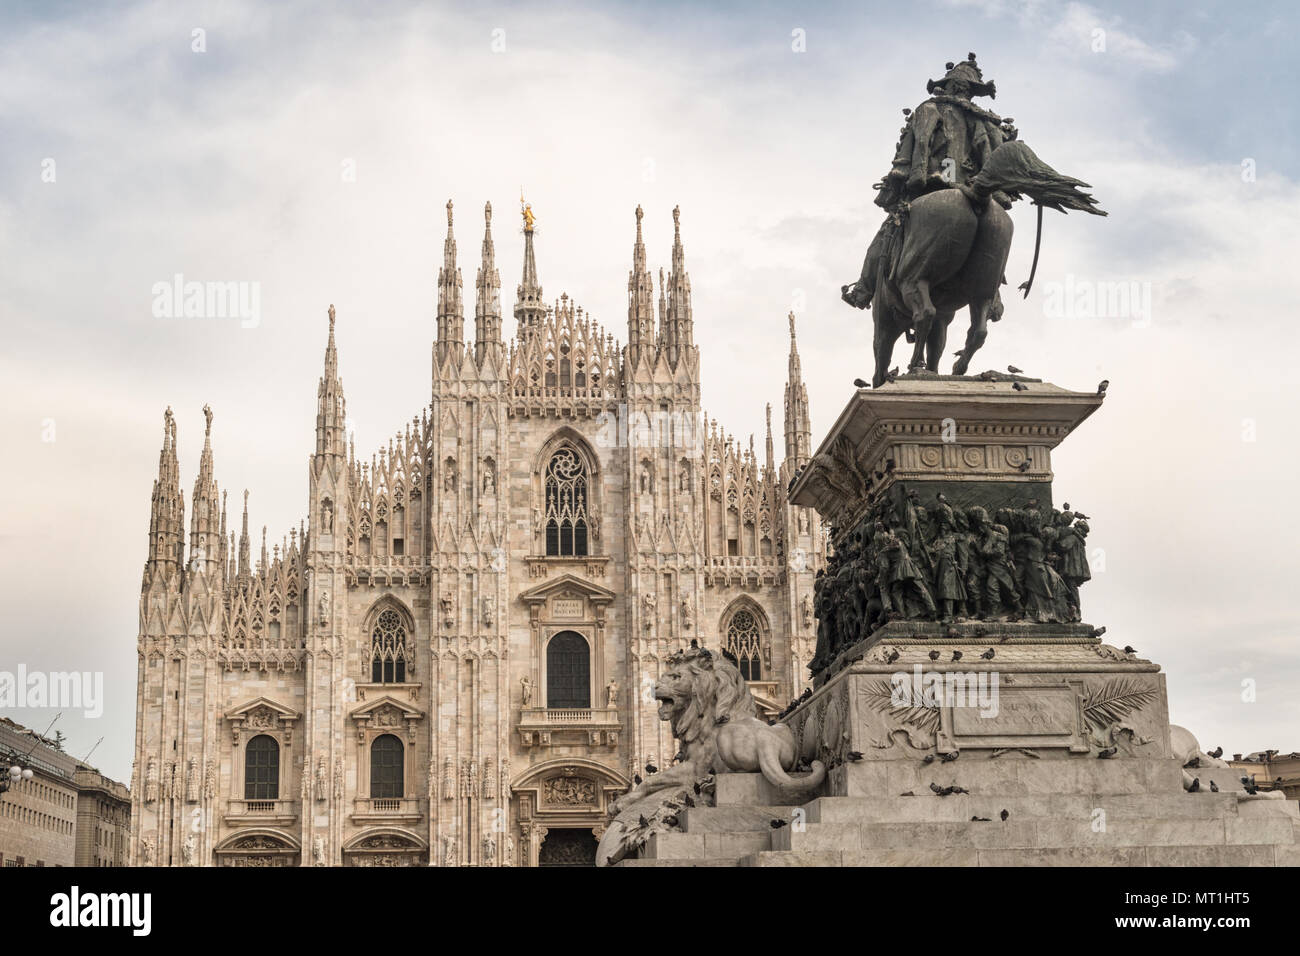 Statue of Vittorio Emanuele II  Emmanuel II in front of the Duomo di Milano Stock Photo